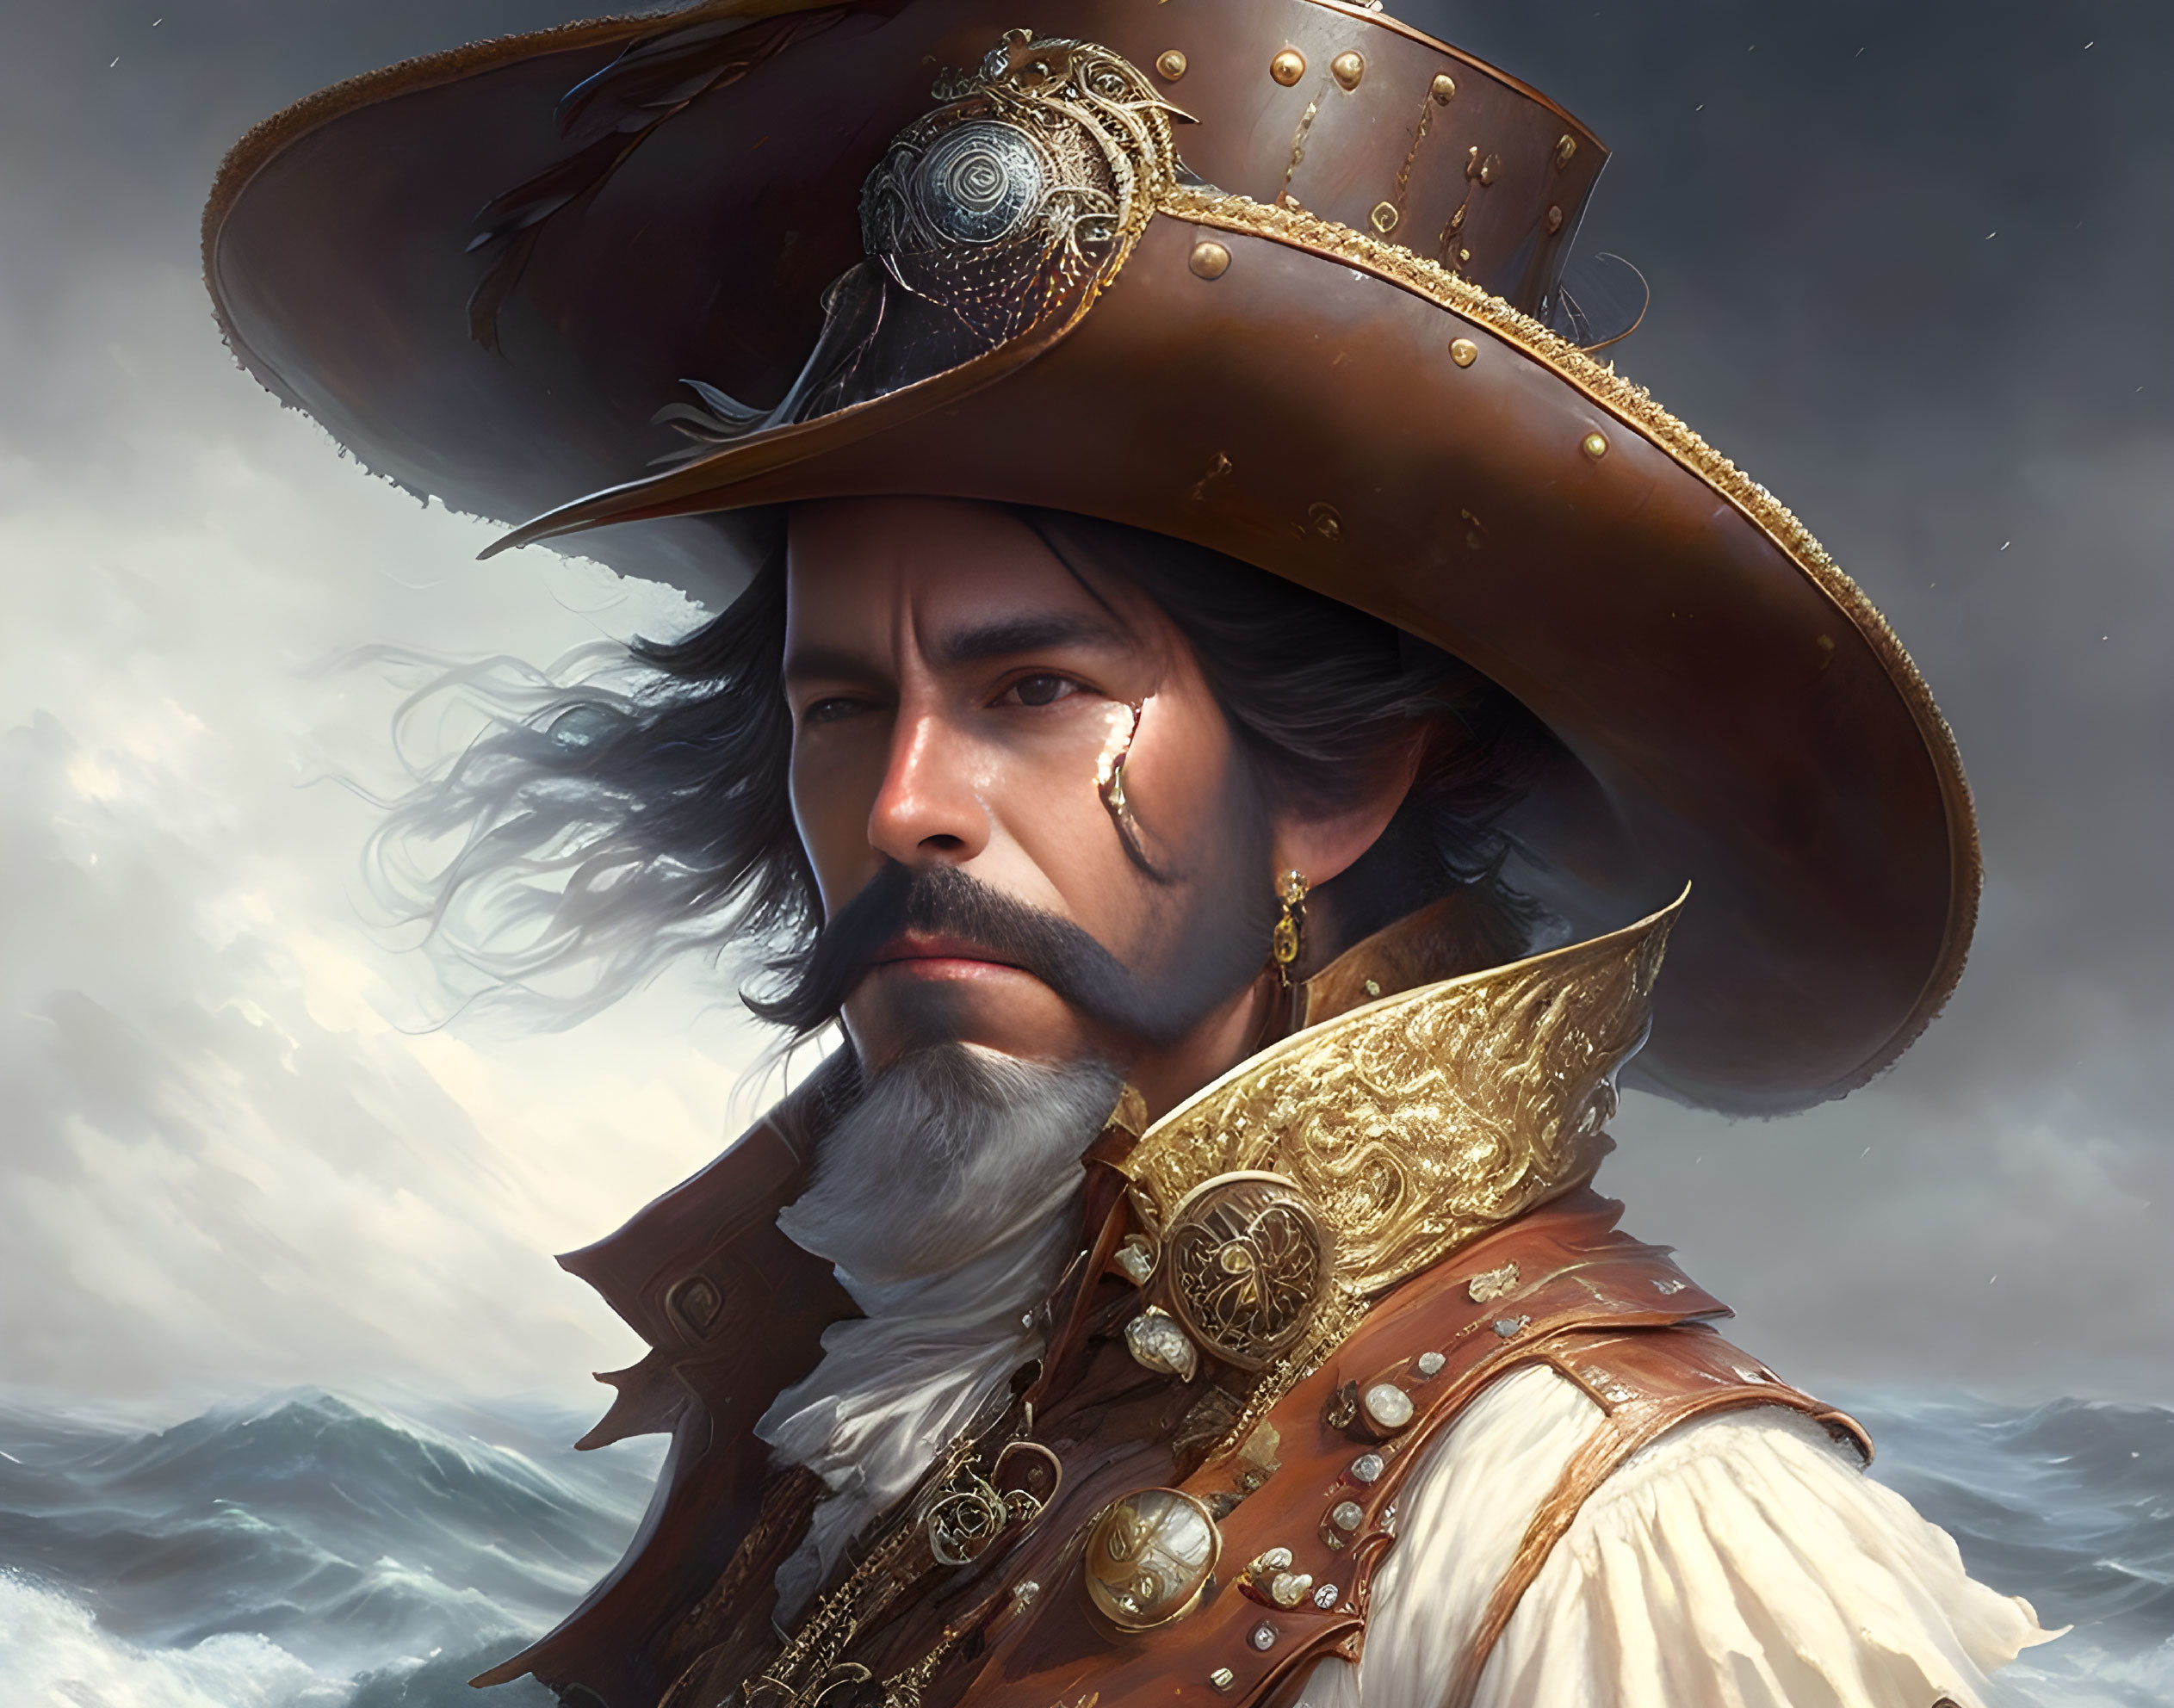 Pirate in Steampunk Style Portrait